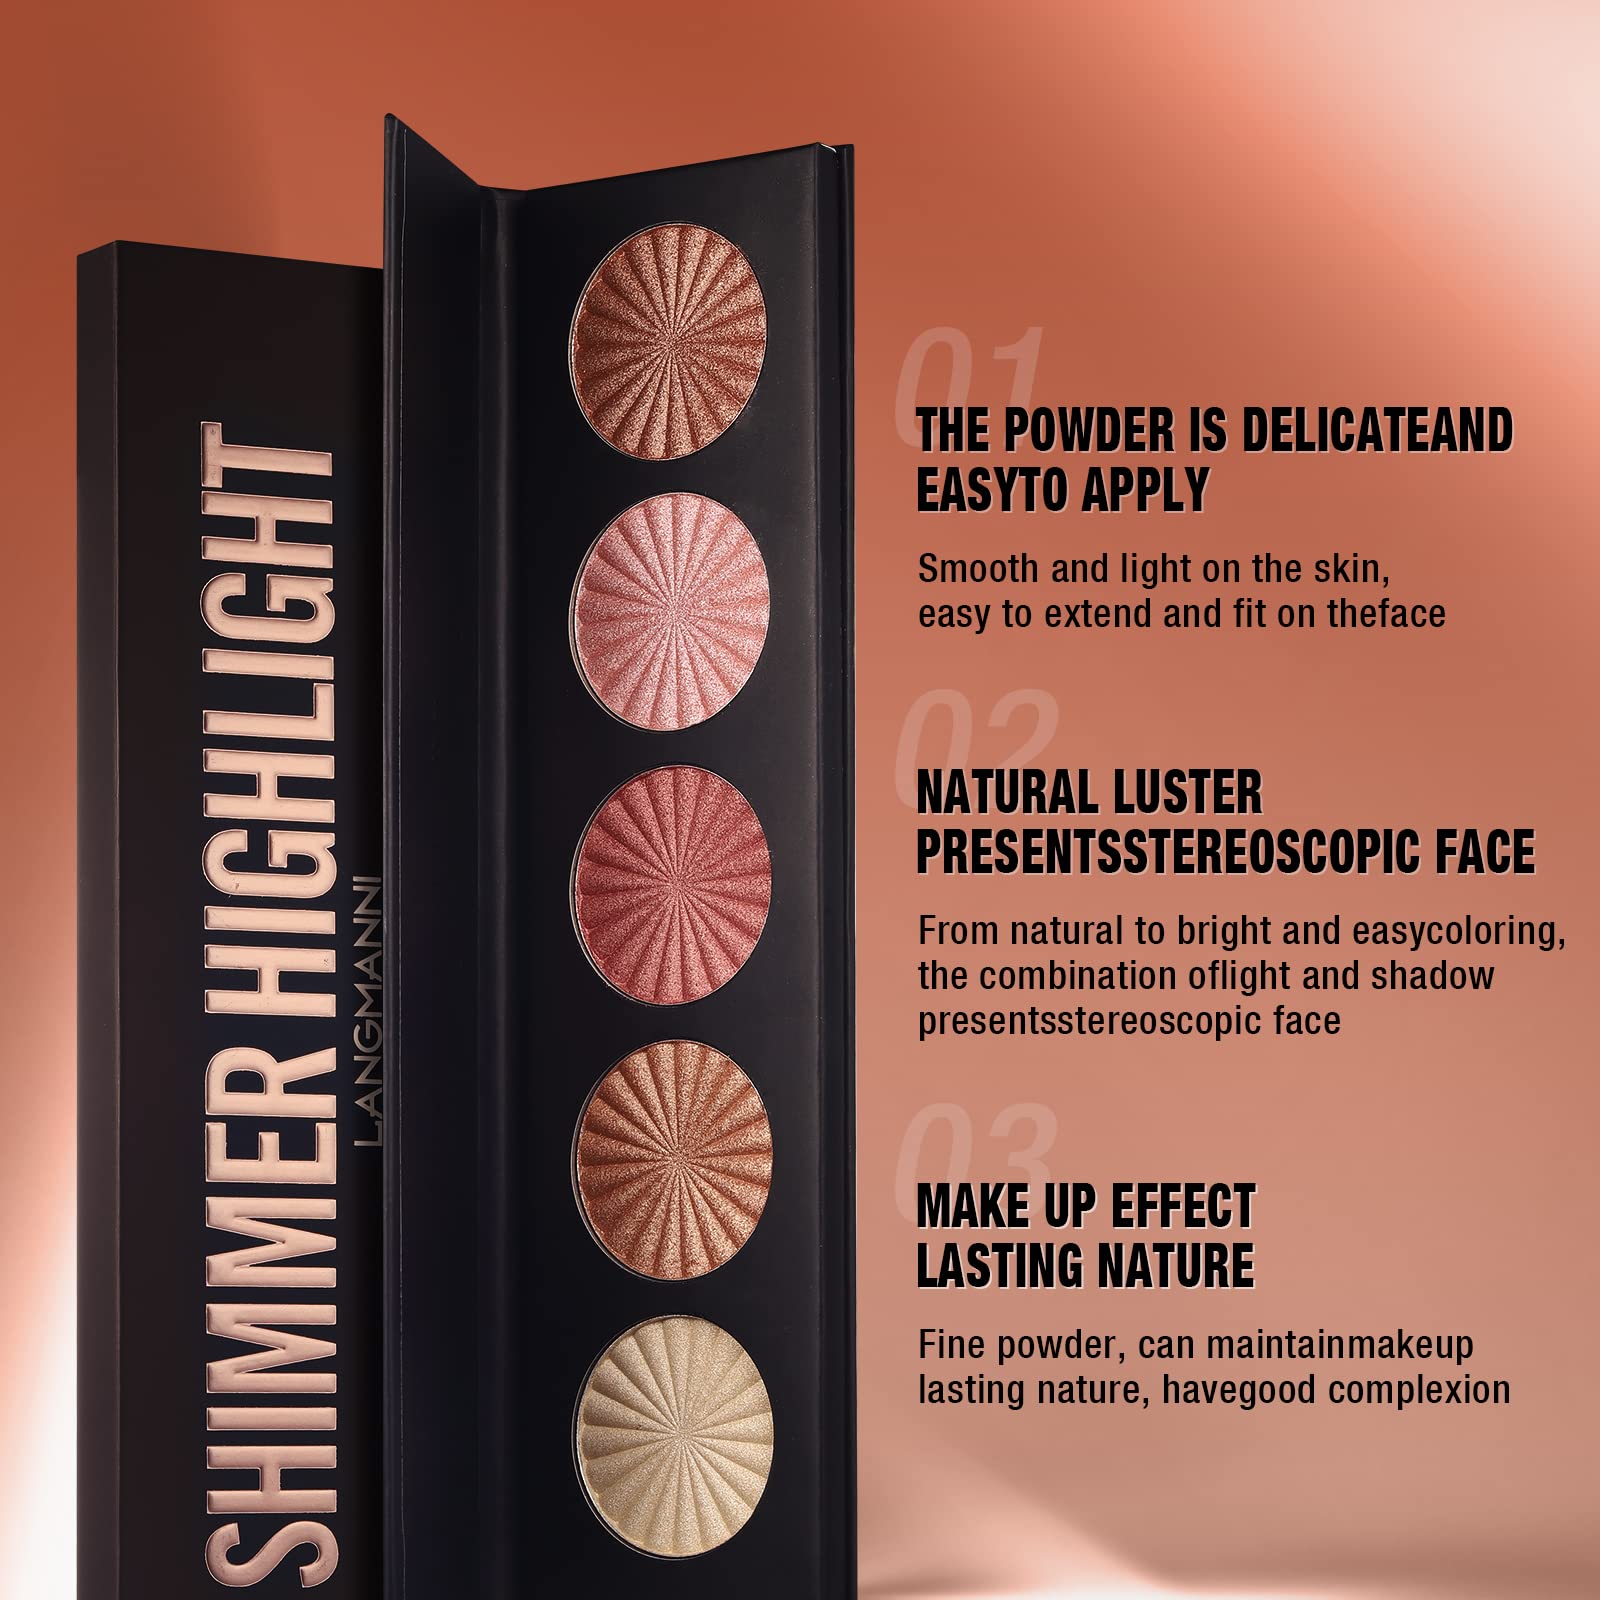 Highlighter Powder Palette, Makeup Palette Facial Bronzers Illuminator Palette Highlighter Baked Waterproof Long Lasting Brilliant Lighten Skin Color (5 Color, 1 Count (Pack of 1))